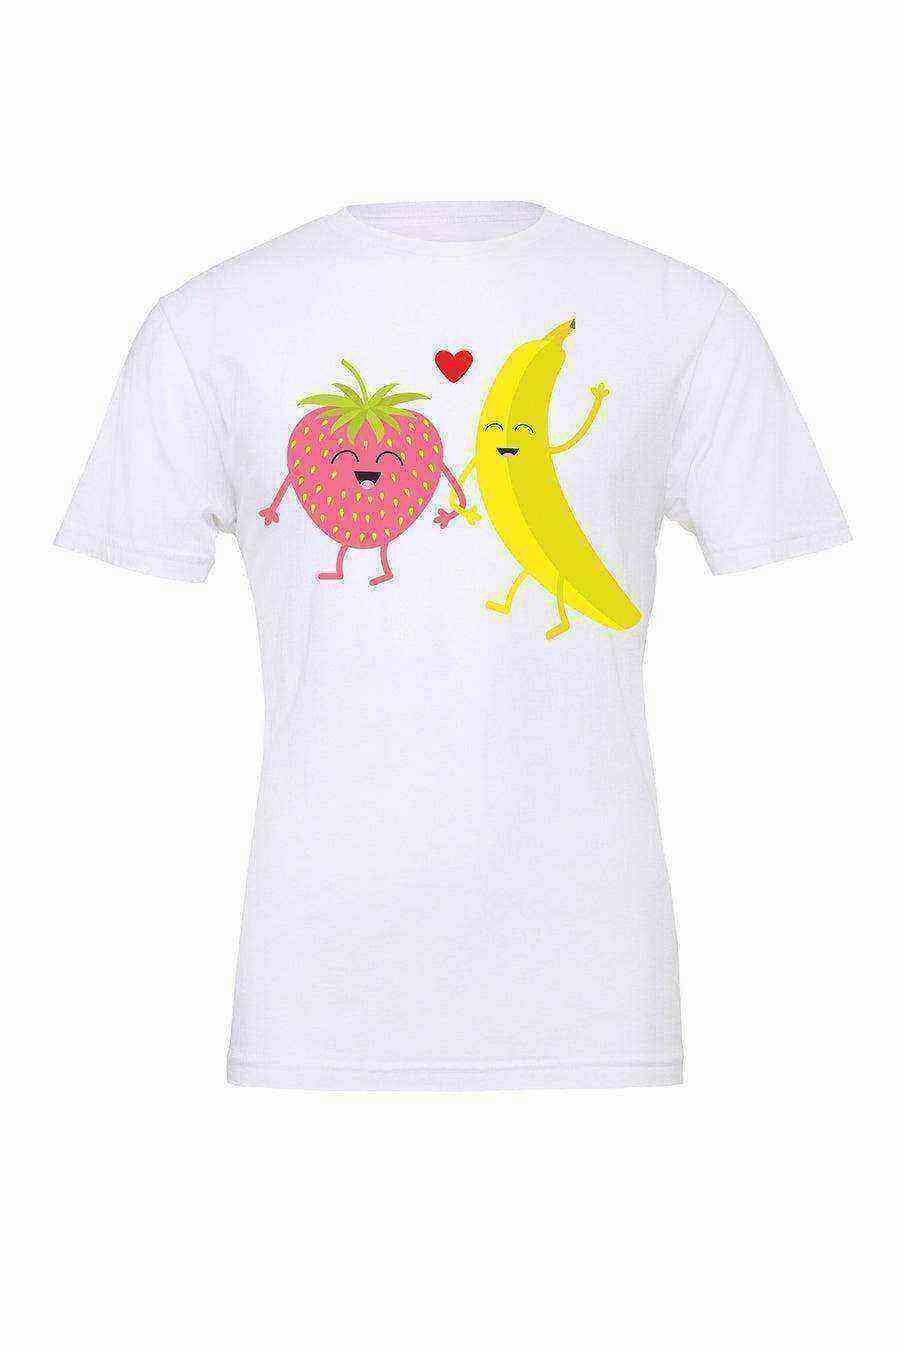 Youth | Strawberry Banana Love Shirt | Summer Shirt | Fruit Shirt - Dylan's Tees